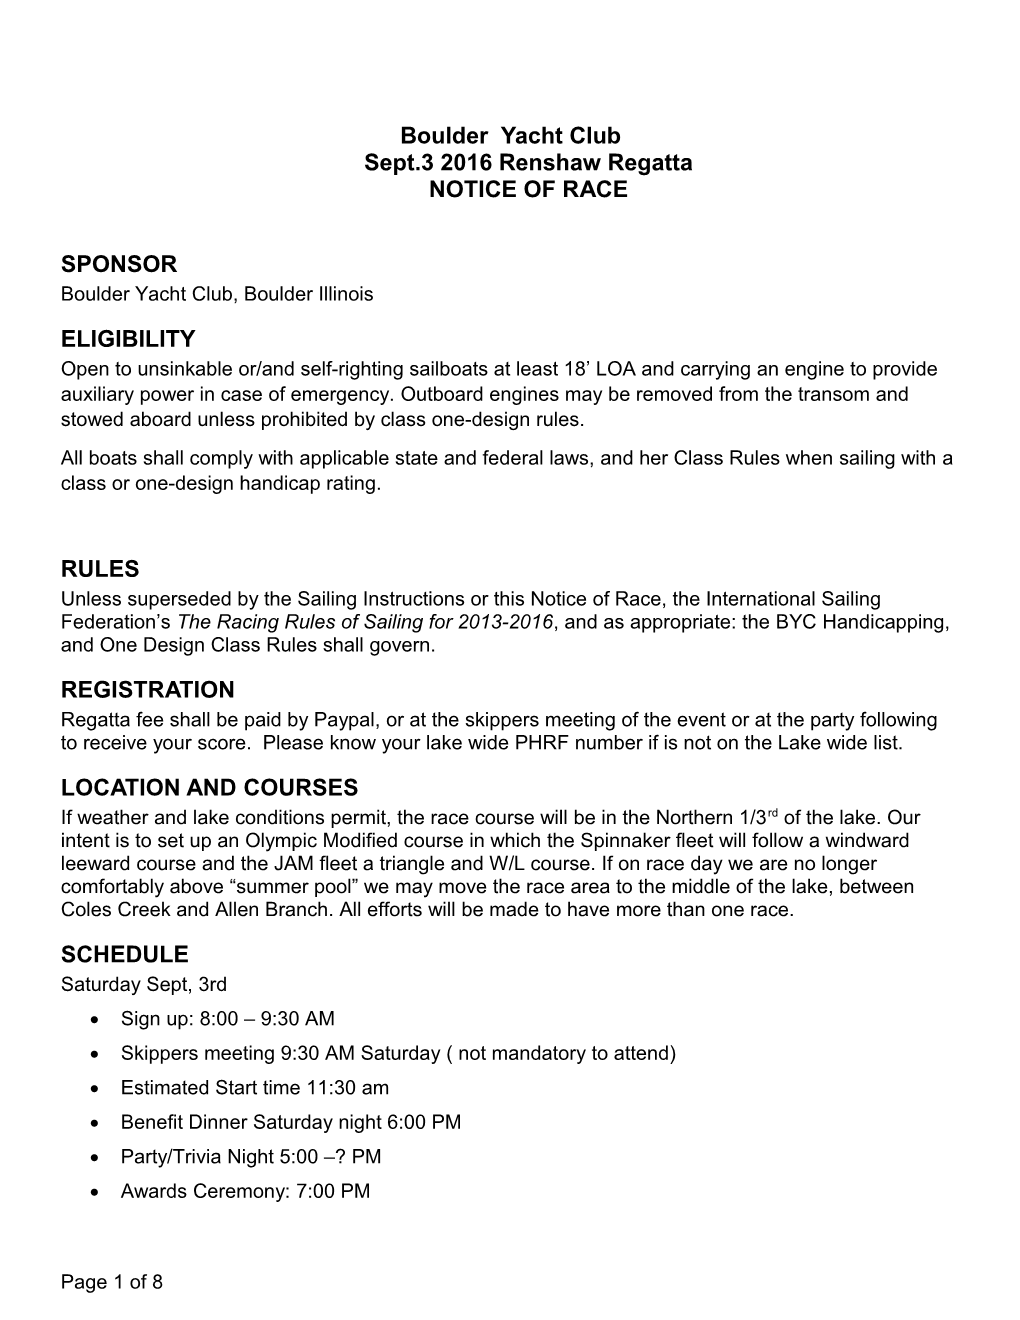 Boulder Yacht Club 2016Renshaw Regatta Notice of Race